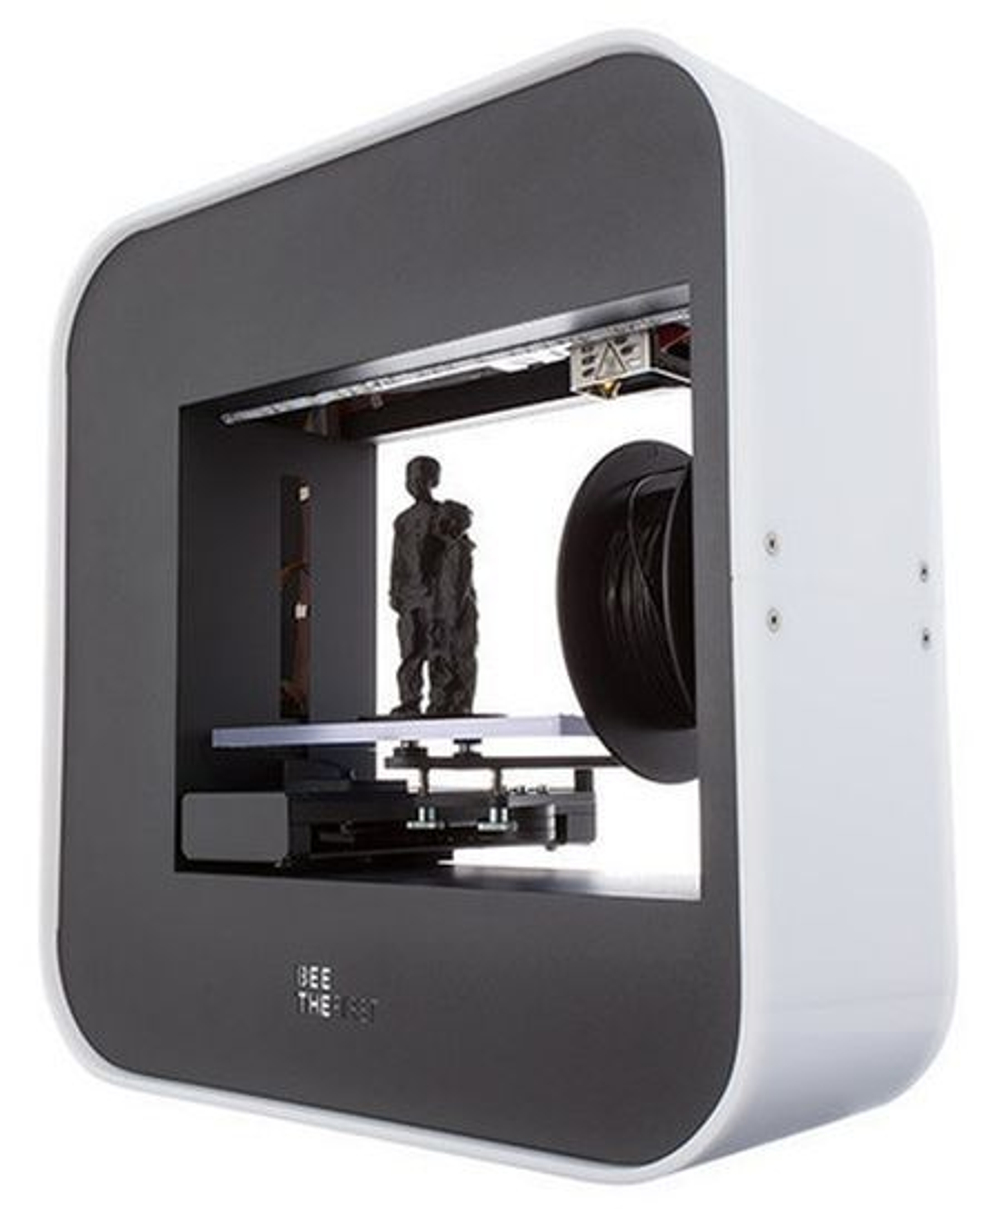 3D принтер BEETHEFIRST